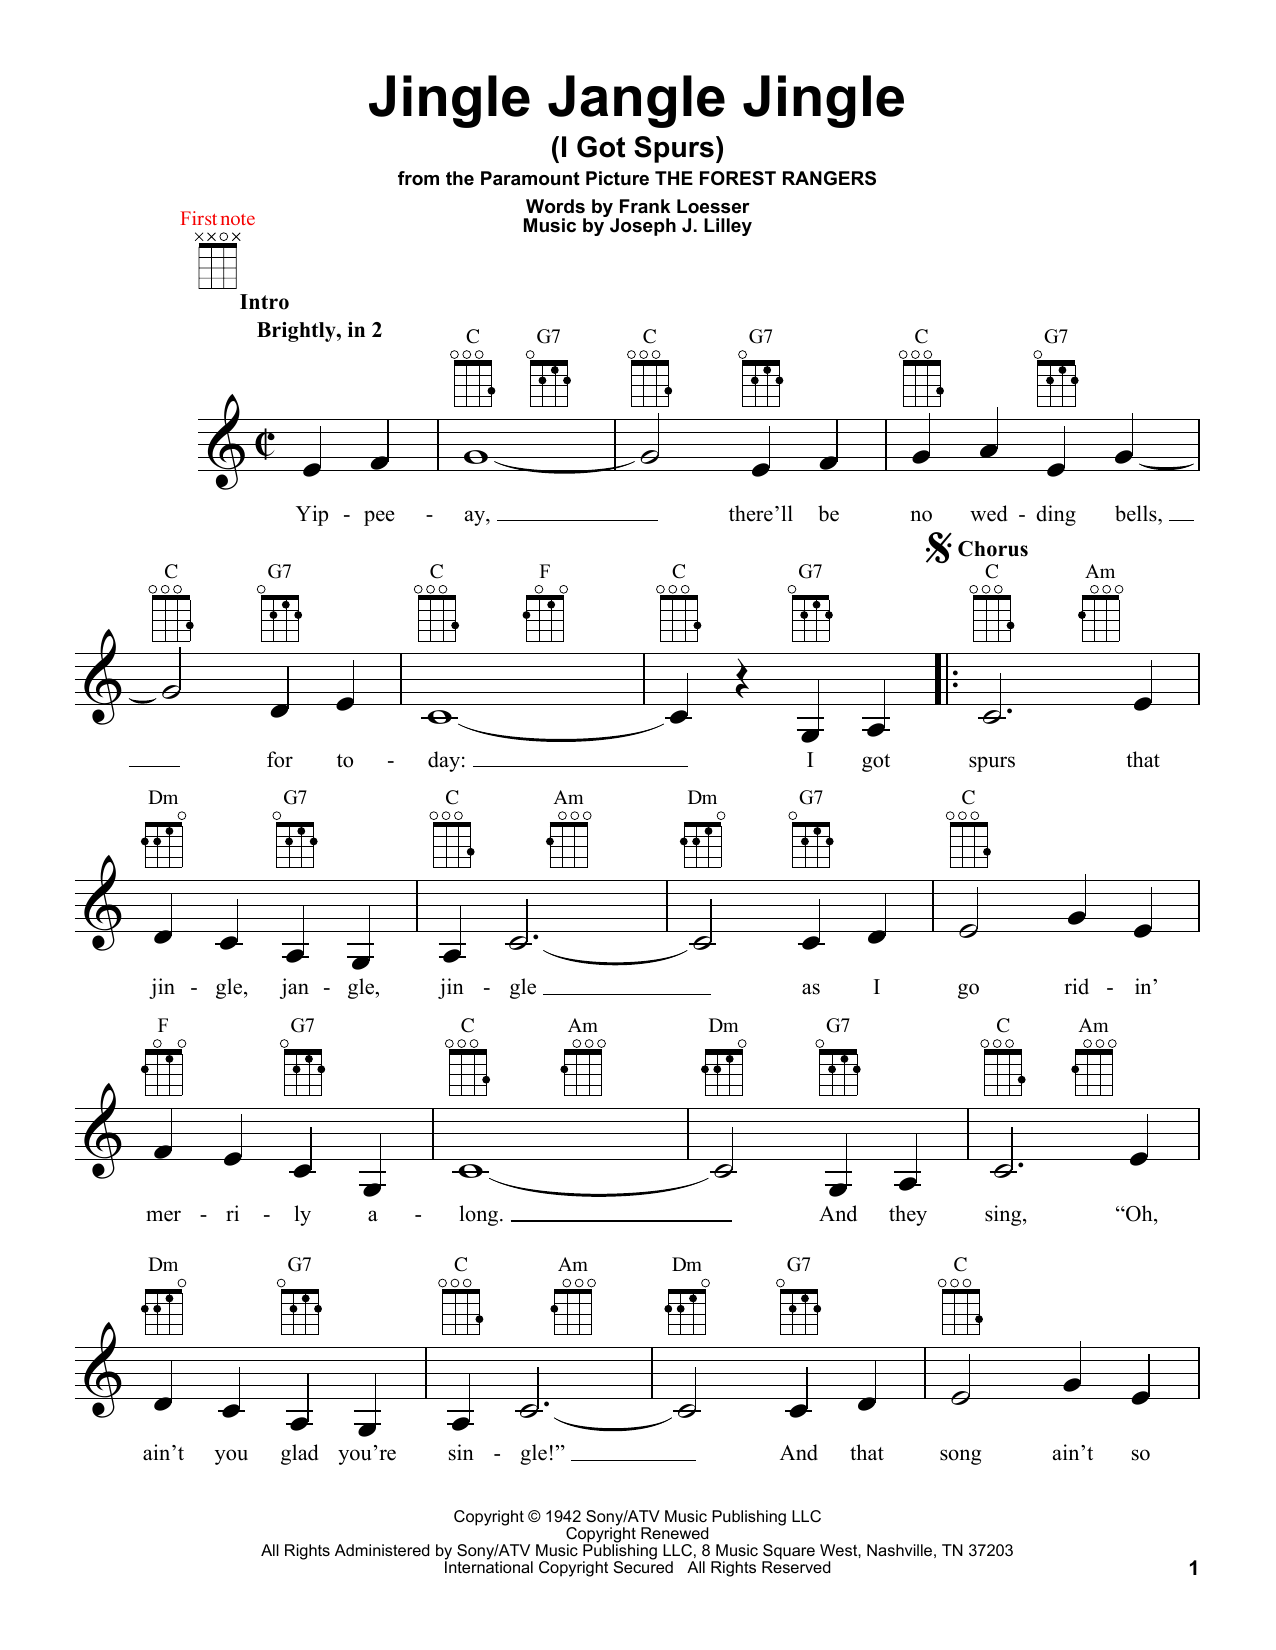 Frank Loesser Jingle Jangle Jingle (I Got Spurs) sheet music notes and chords arranged for Banjo Tab